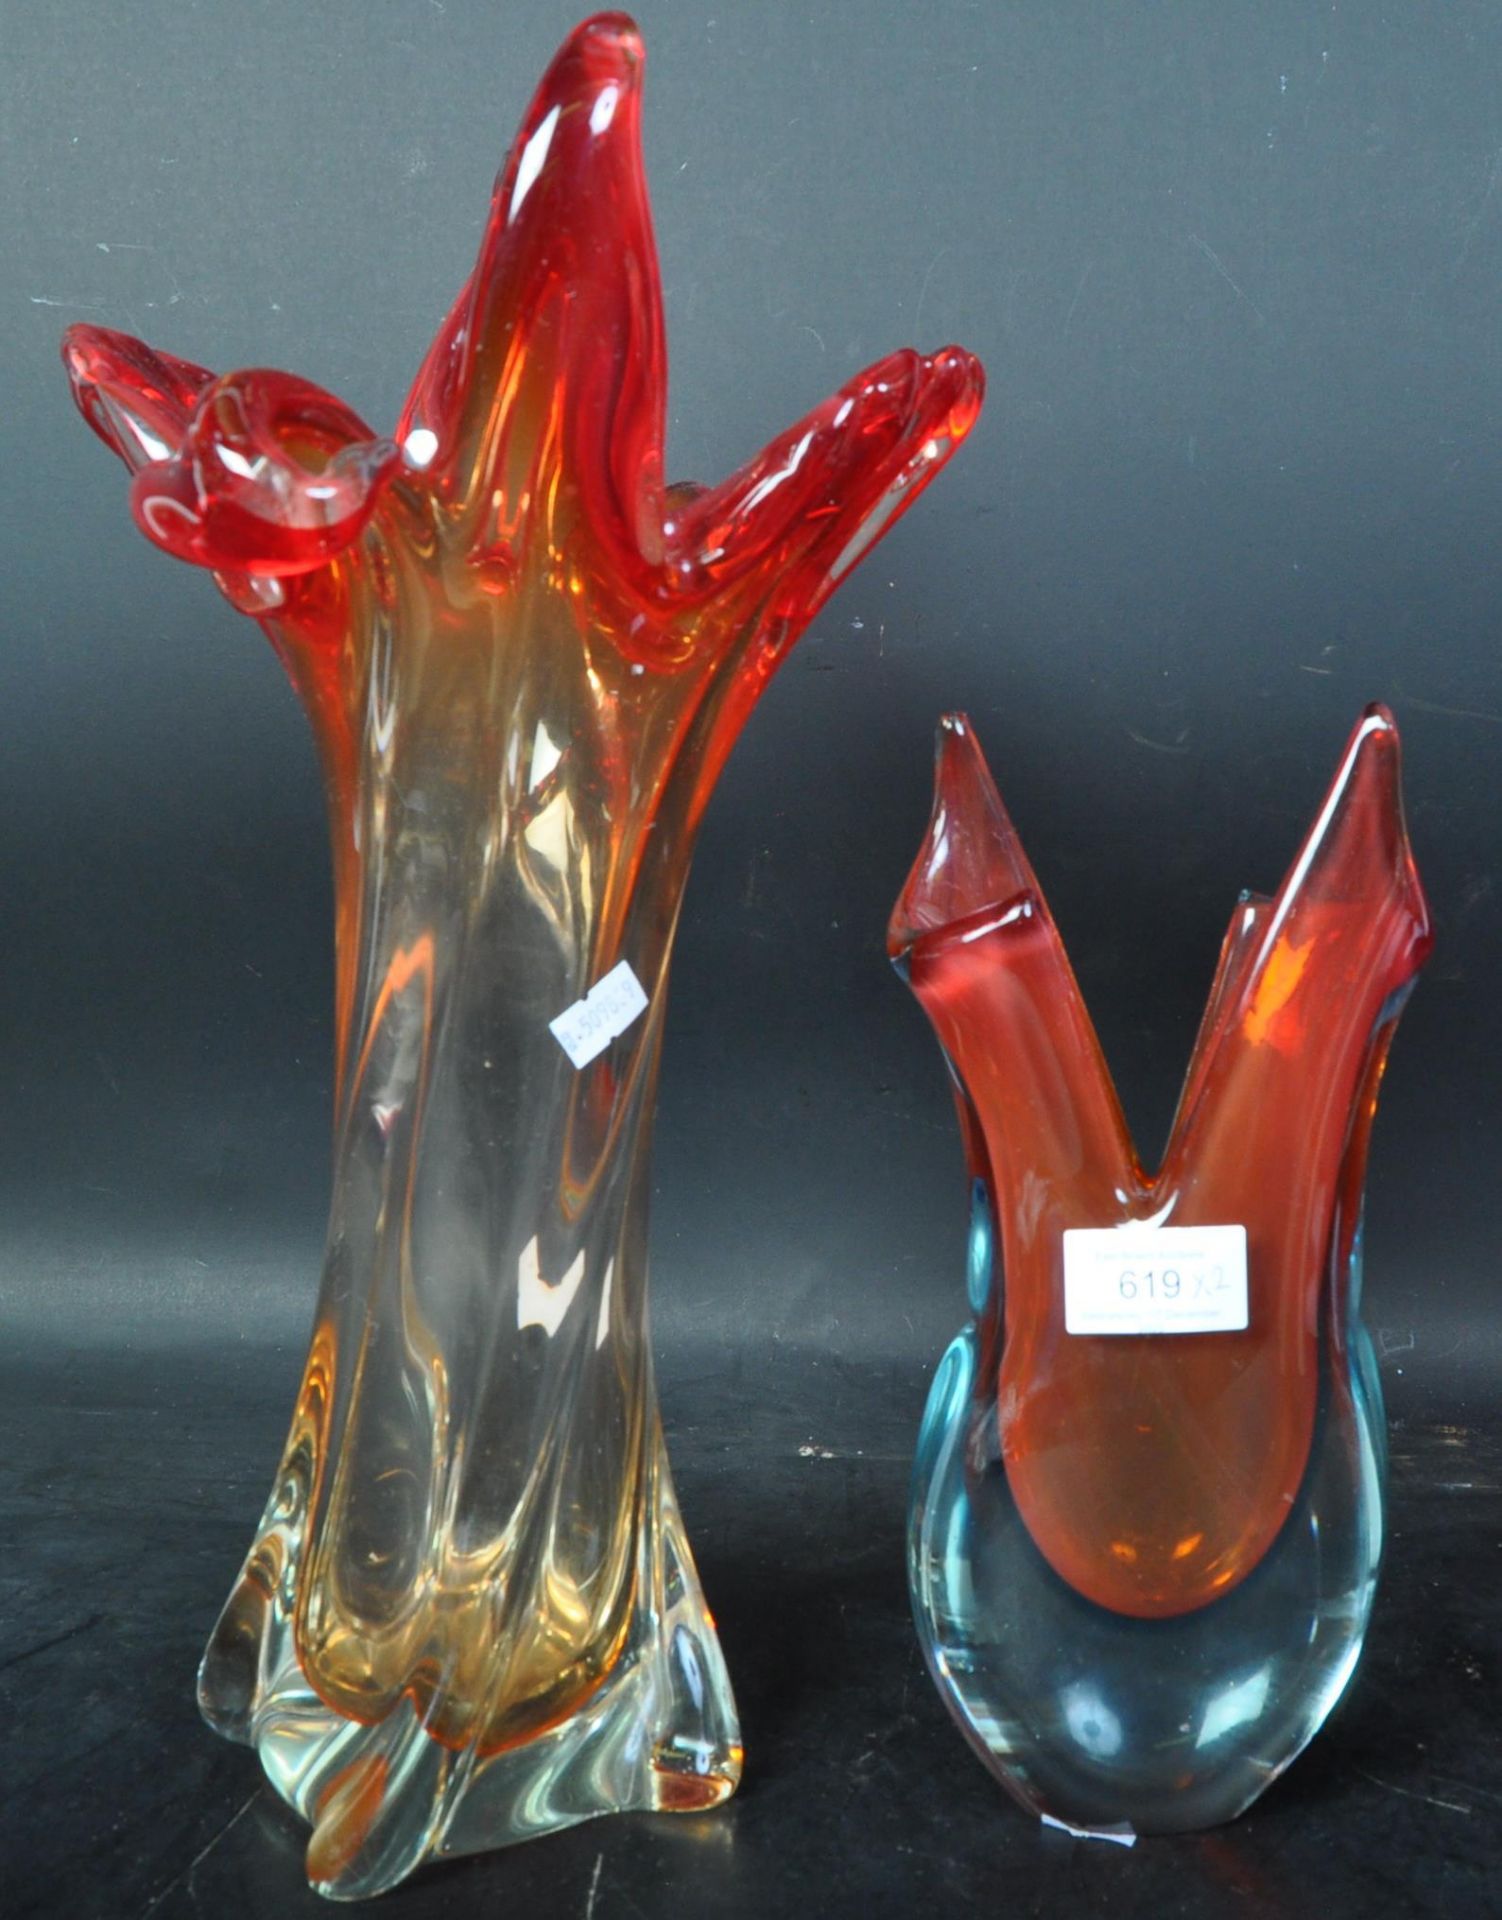 TWO RETRO MID CENTURY MURANO STYLE GLASS VASES - Image 2 of 5